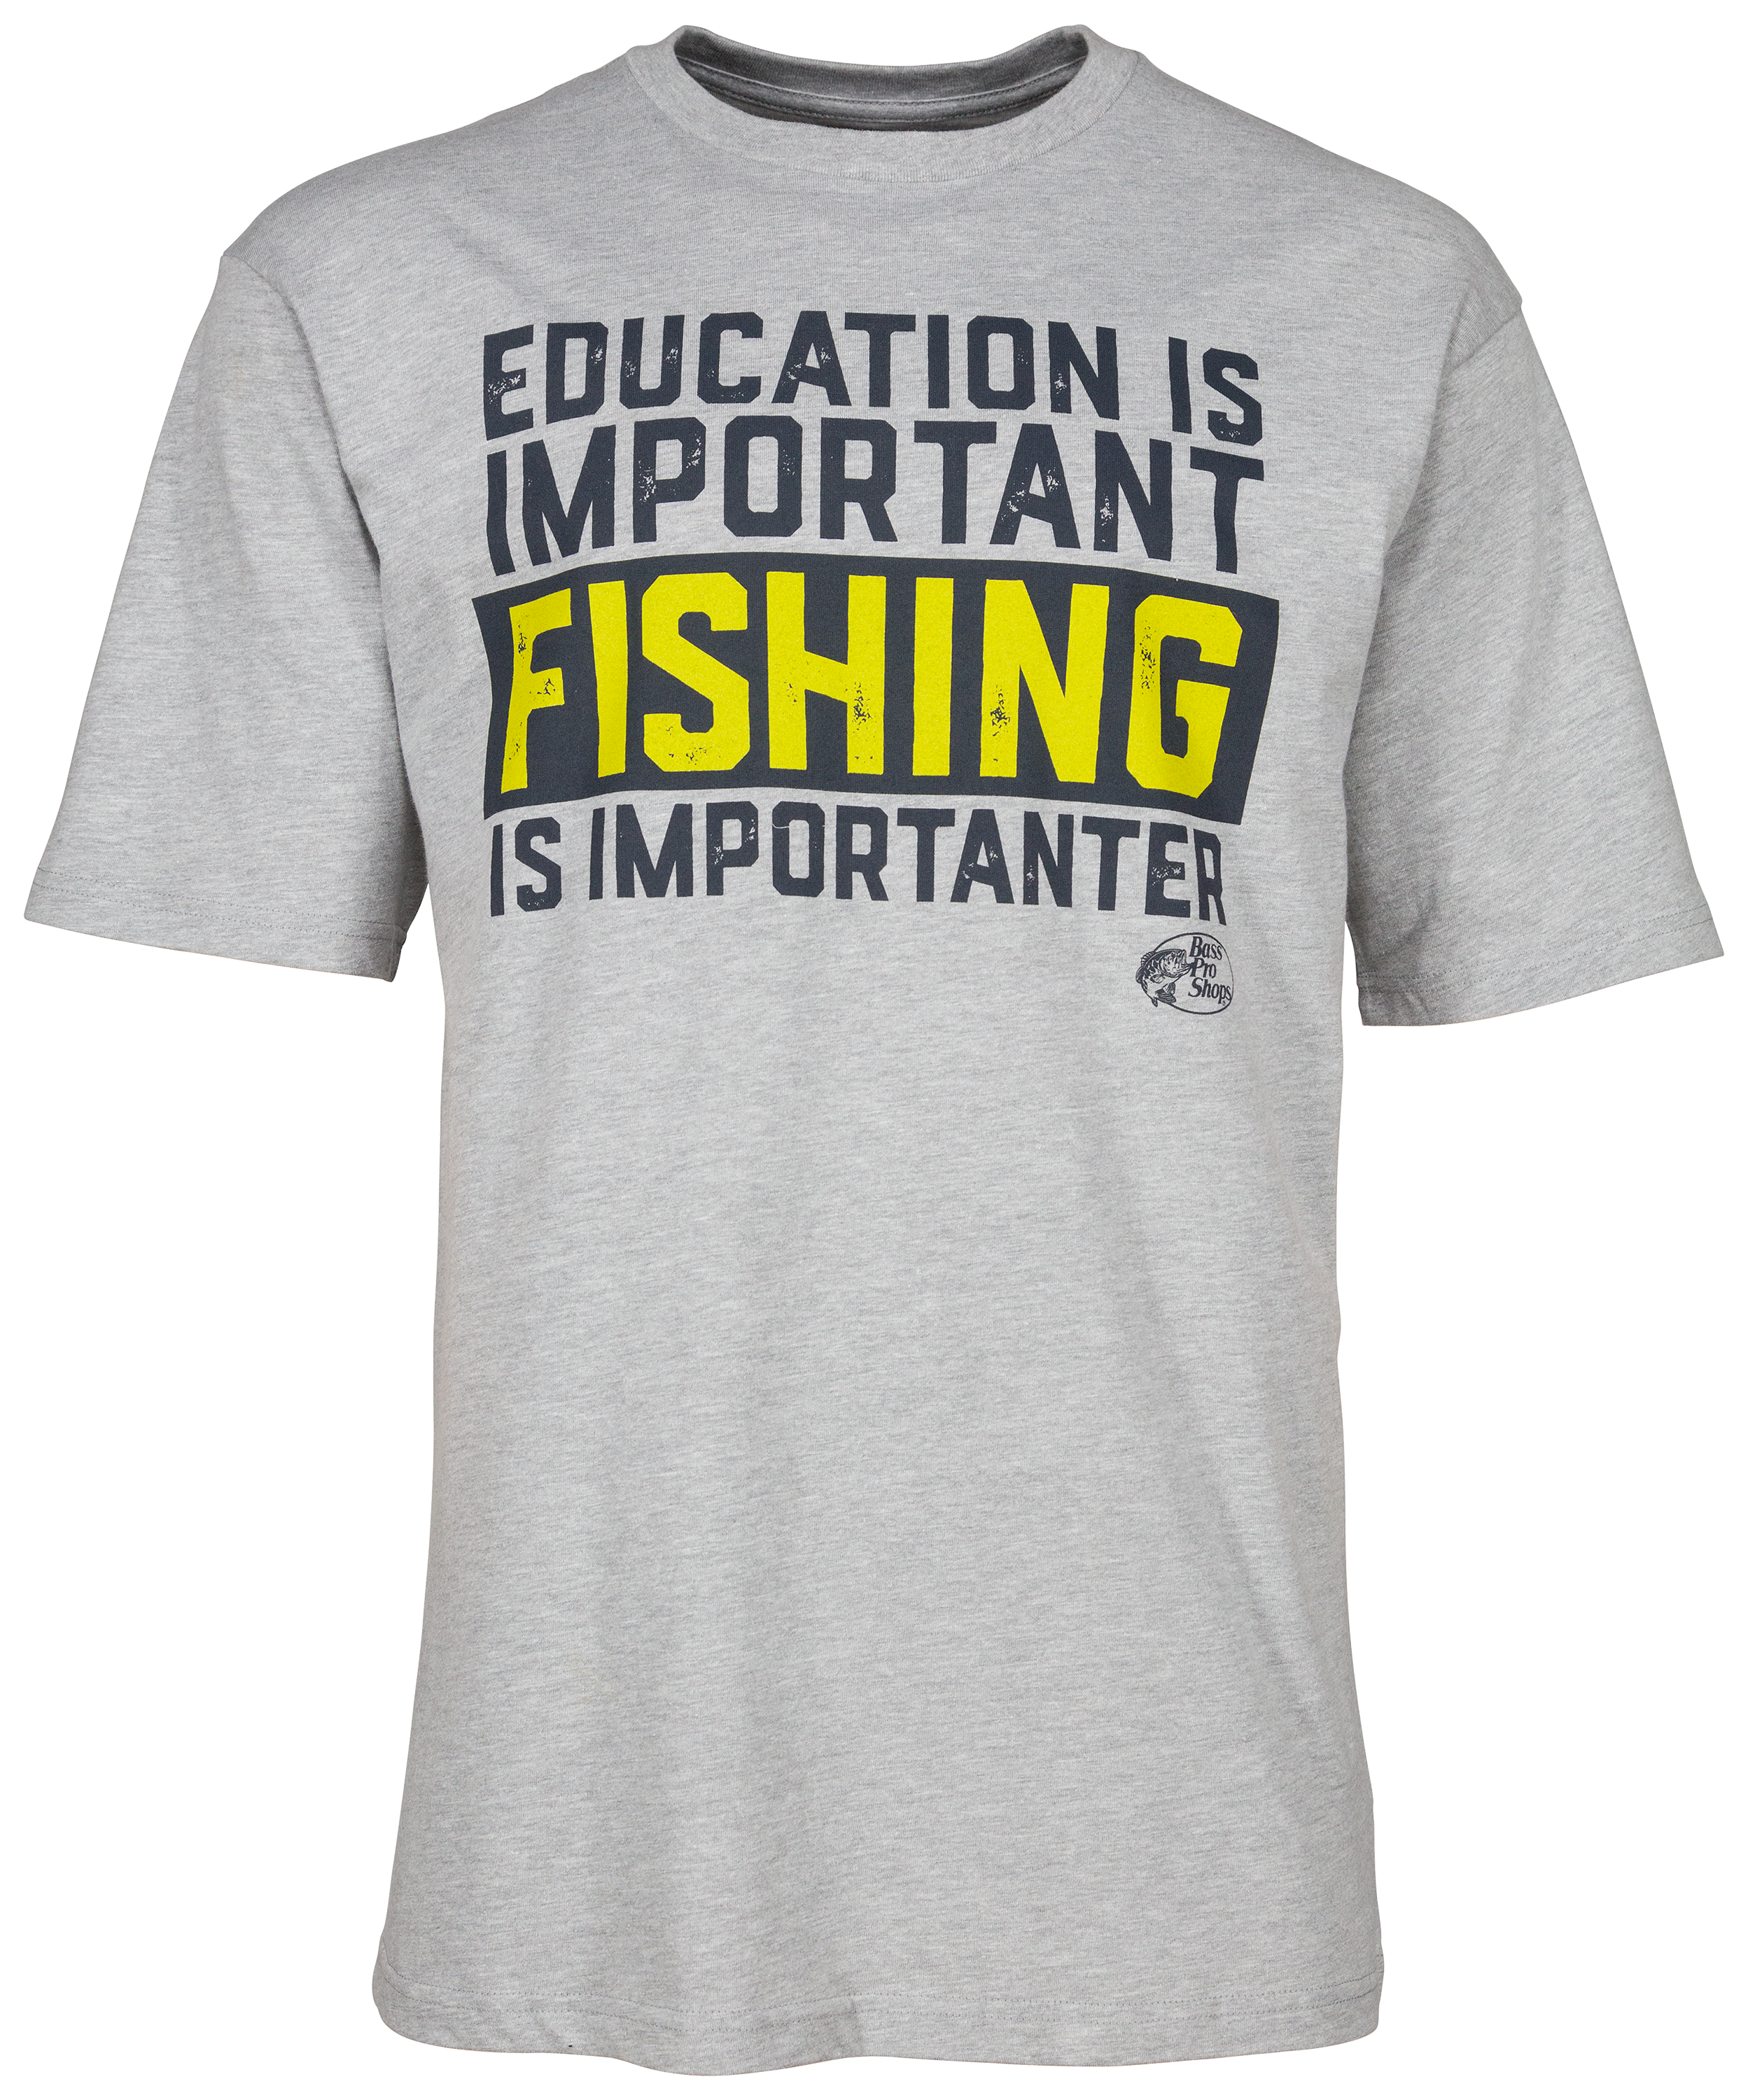 Bass Pro Shops Daddy's Fishing Buddy Short-Sleeve T-Shirt for